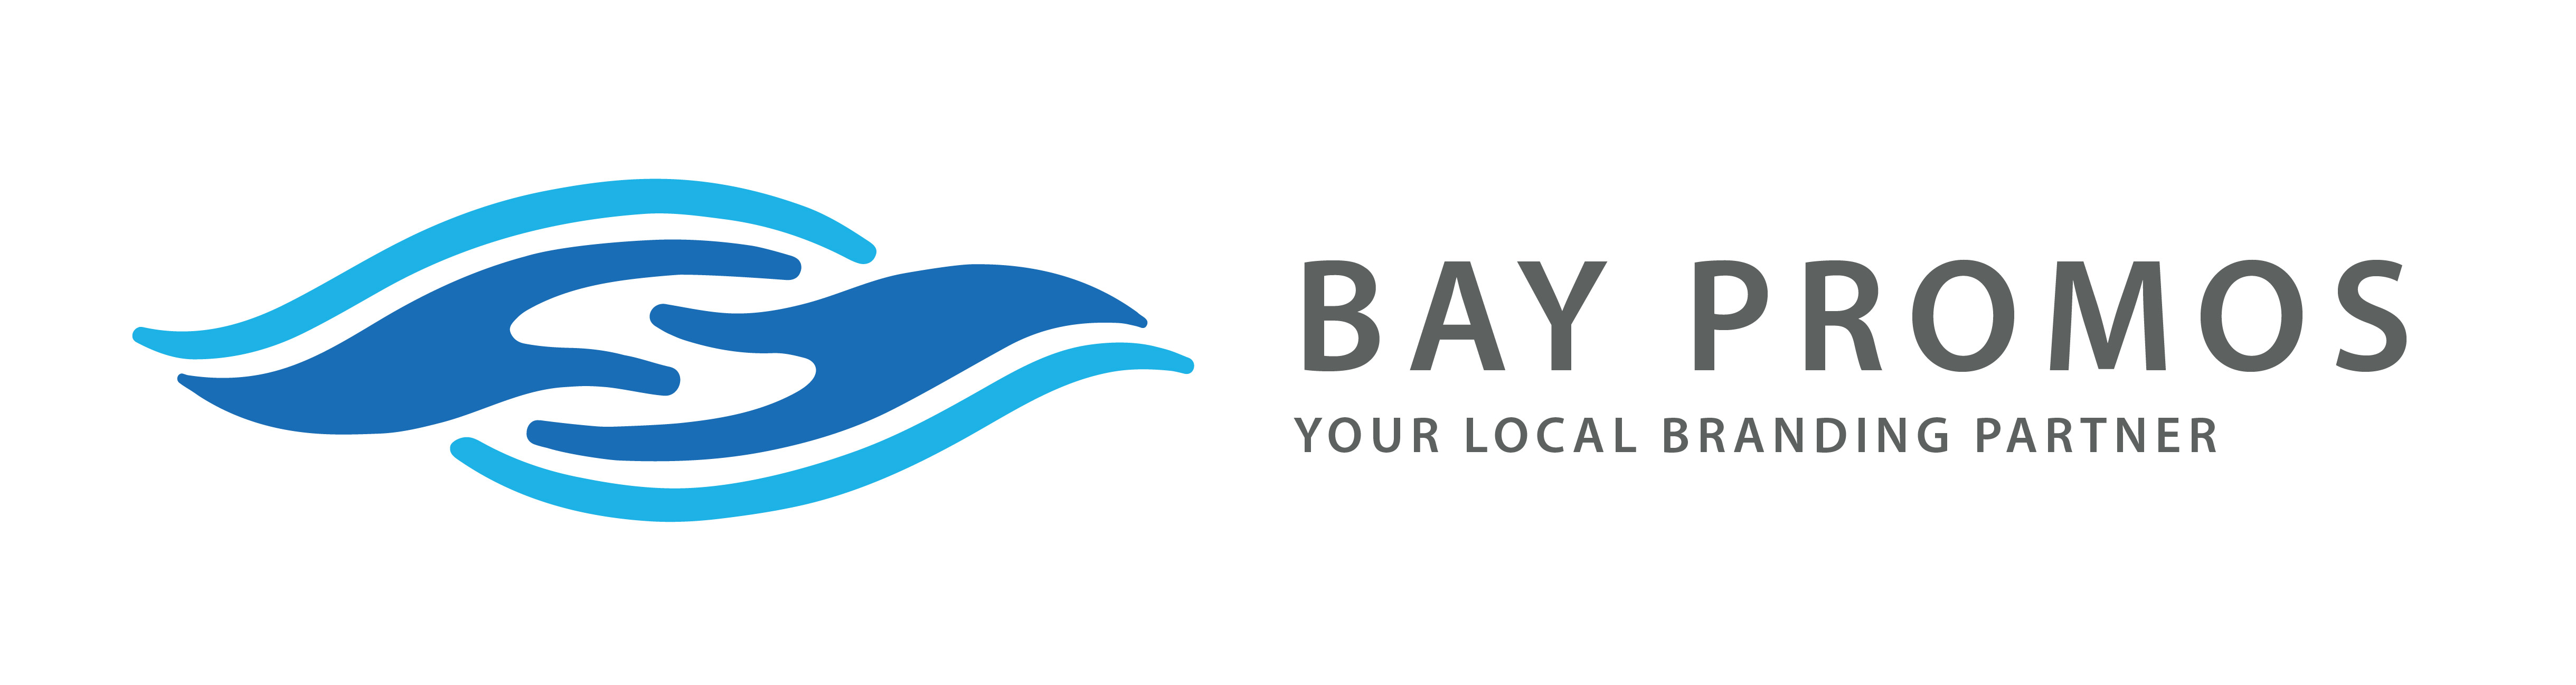 Bay Promos's Logo